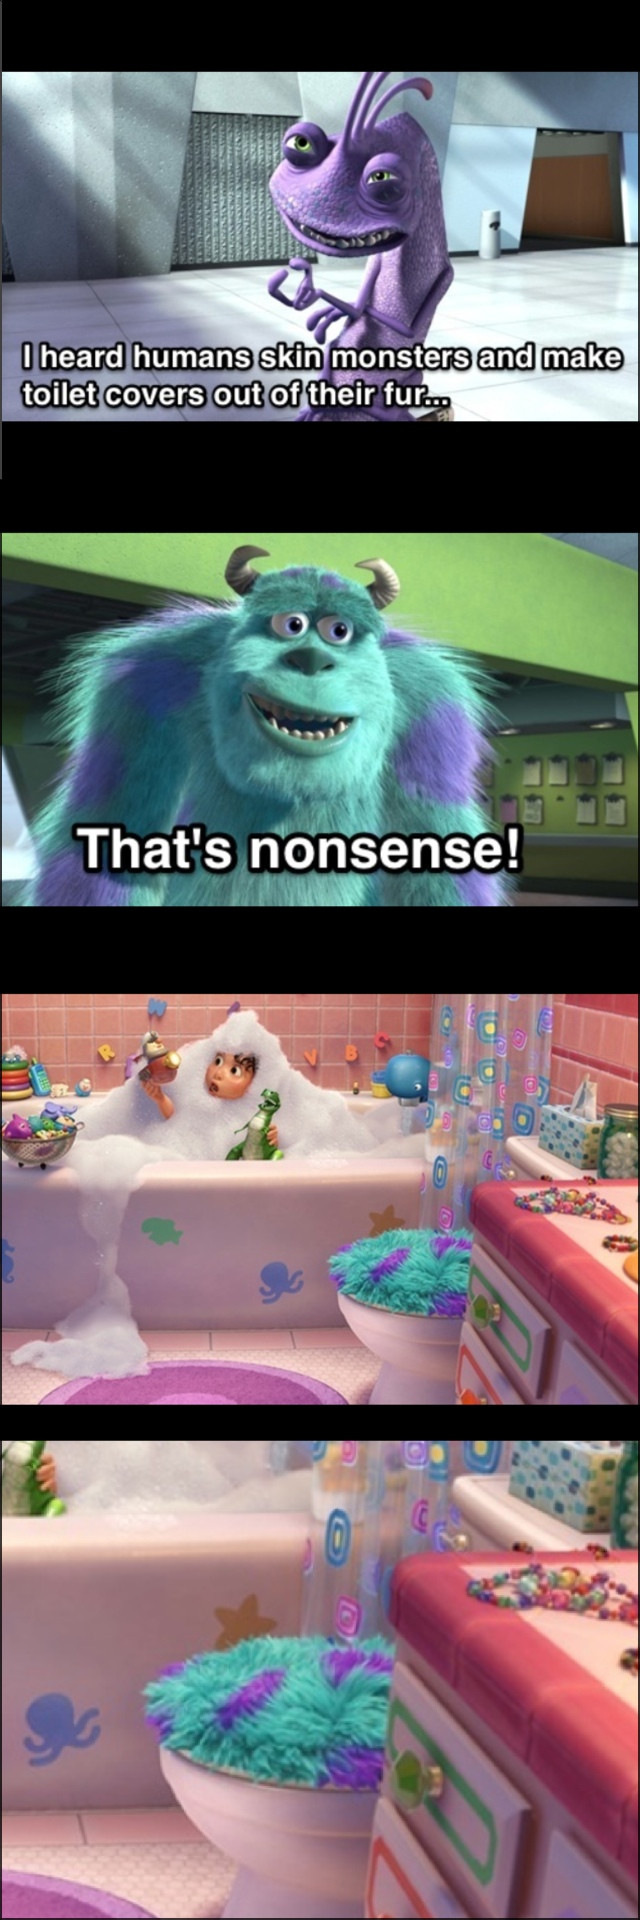 One of Pixar's darker jokes